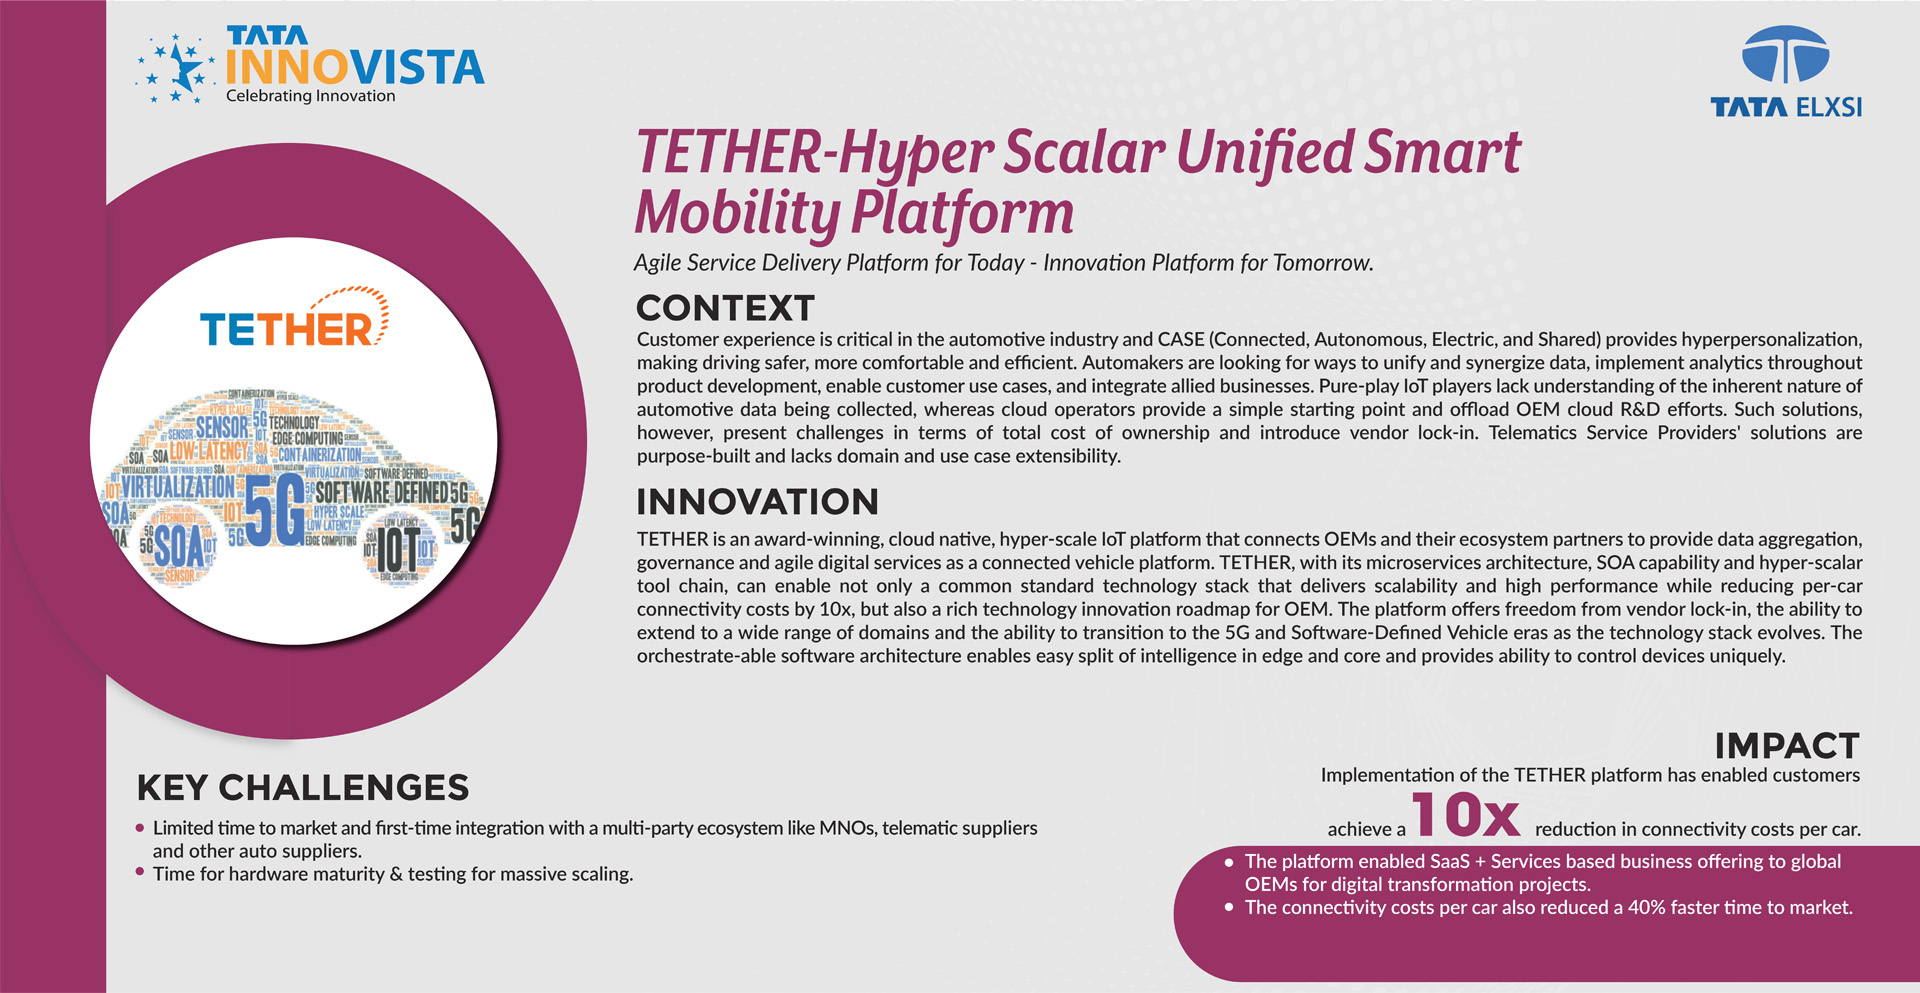 Tata Elxsi - TETHER-HyperScalar Unified Smart Mobility Platform